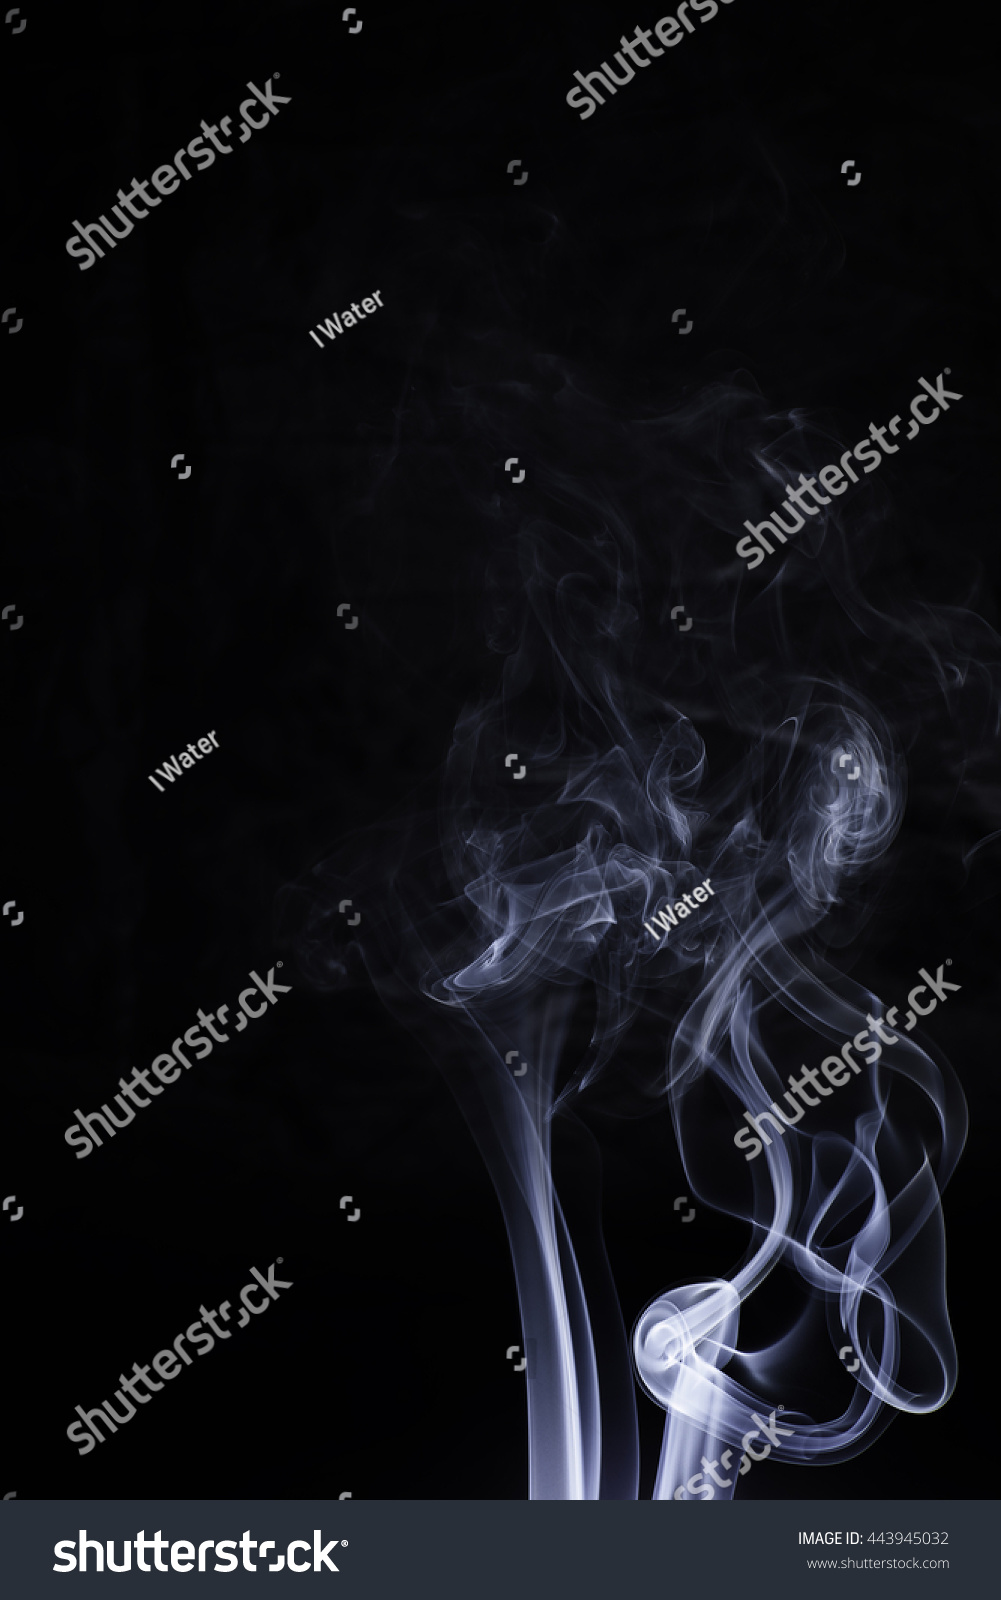 Smoke and Black Background #443945032